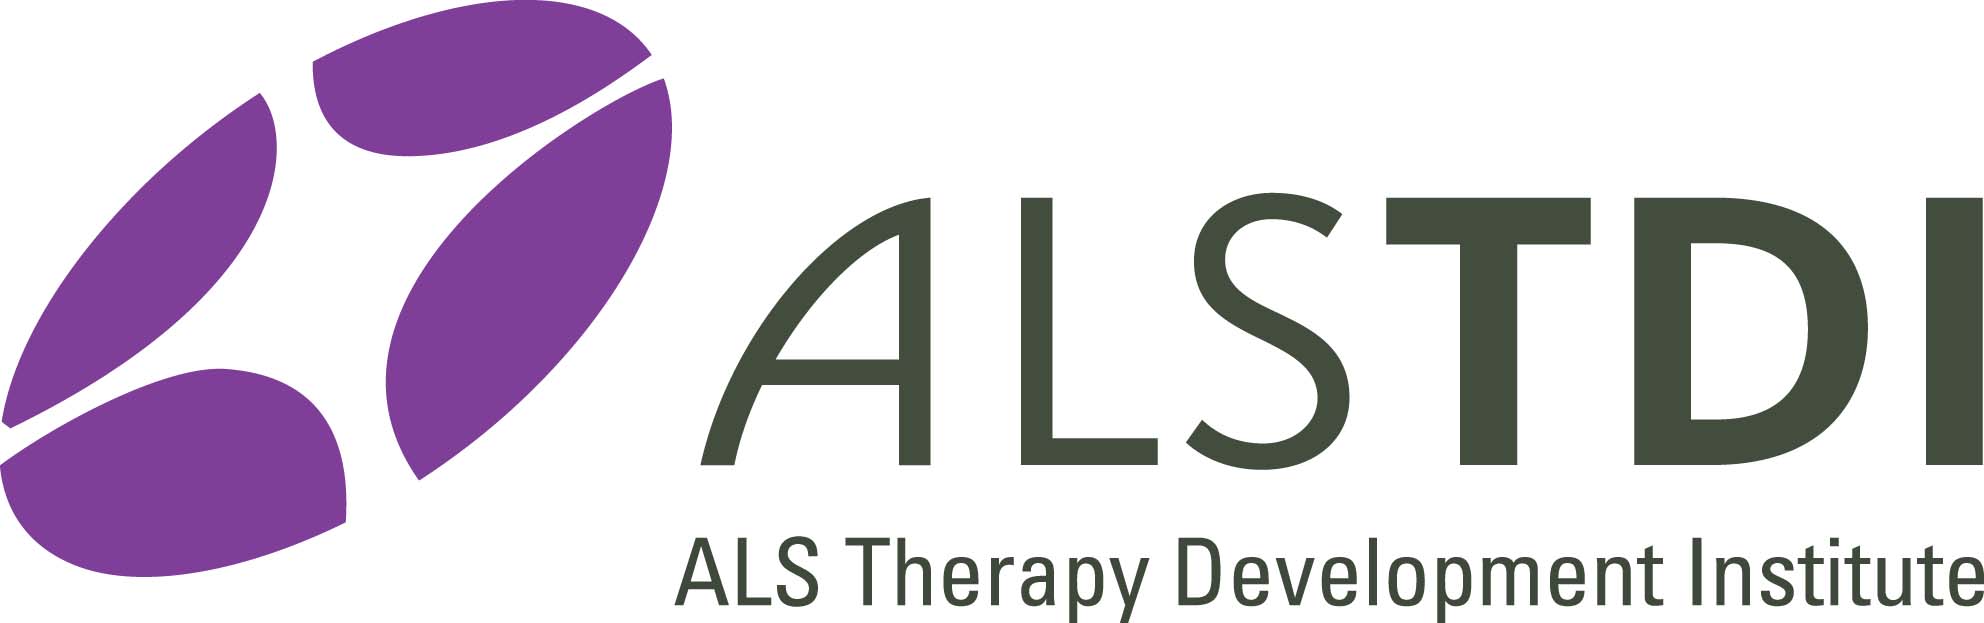 ALS Therapy Development Institute logo